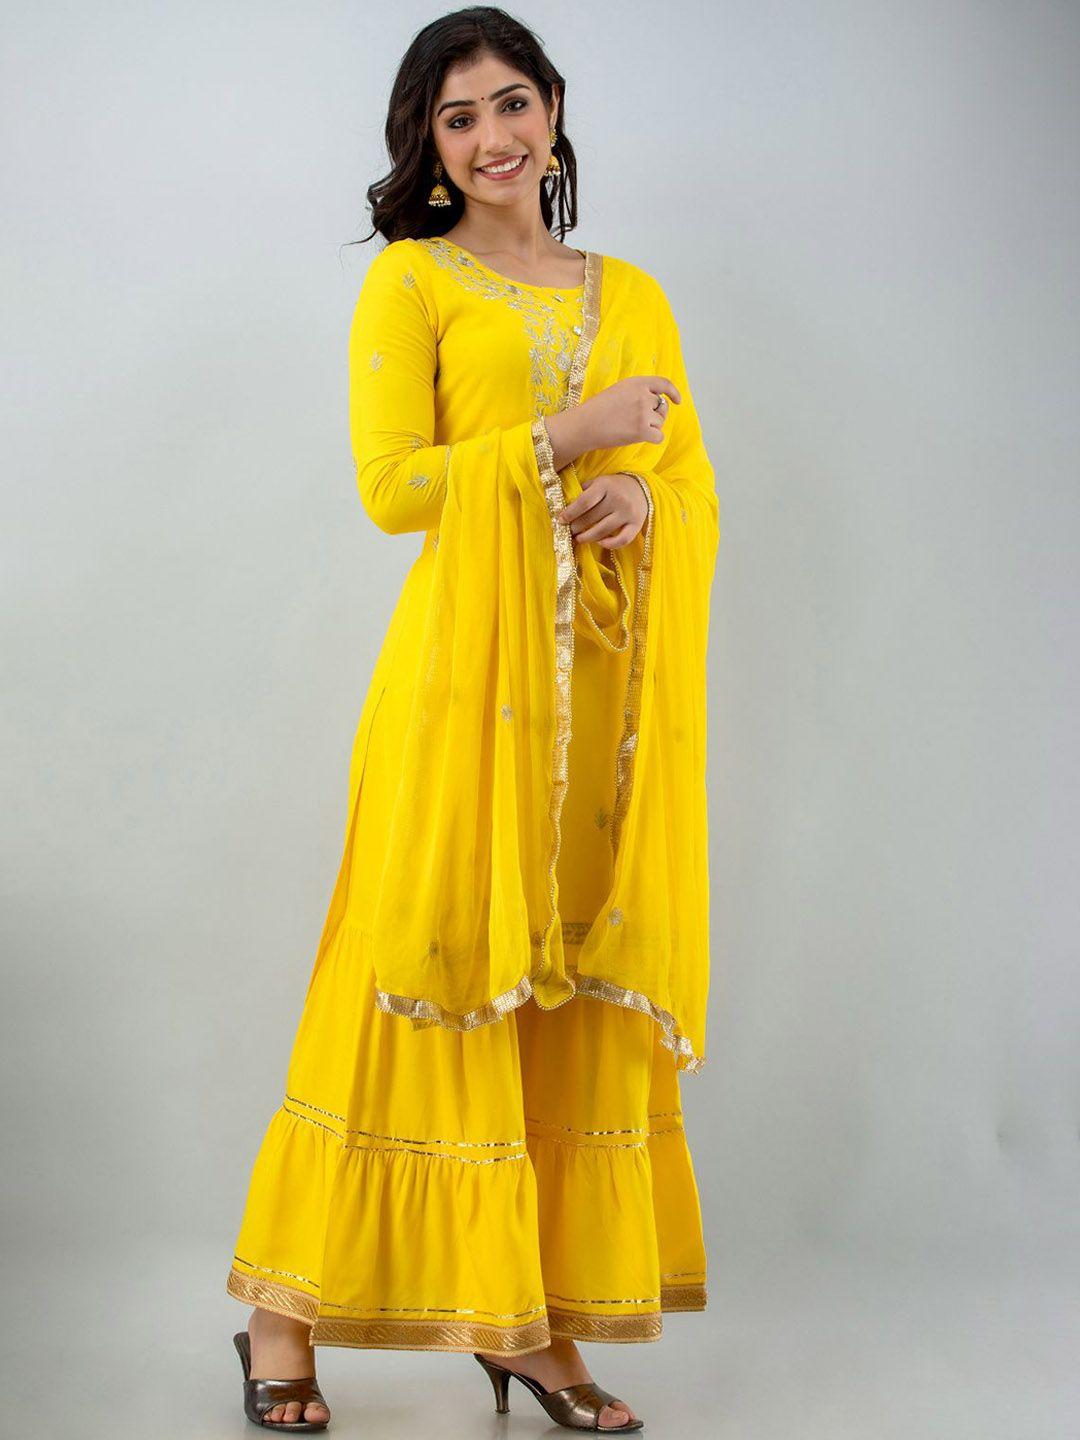 lovista women yellow floral embroidered empire thread work kurti with sharara & with dupatta